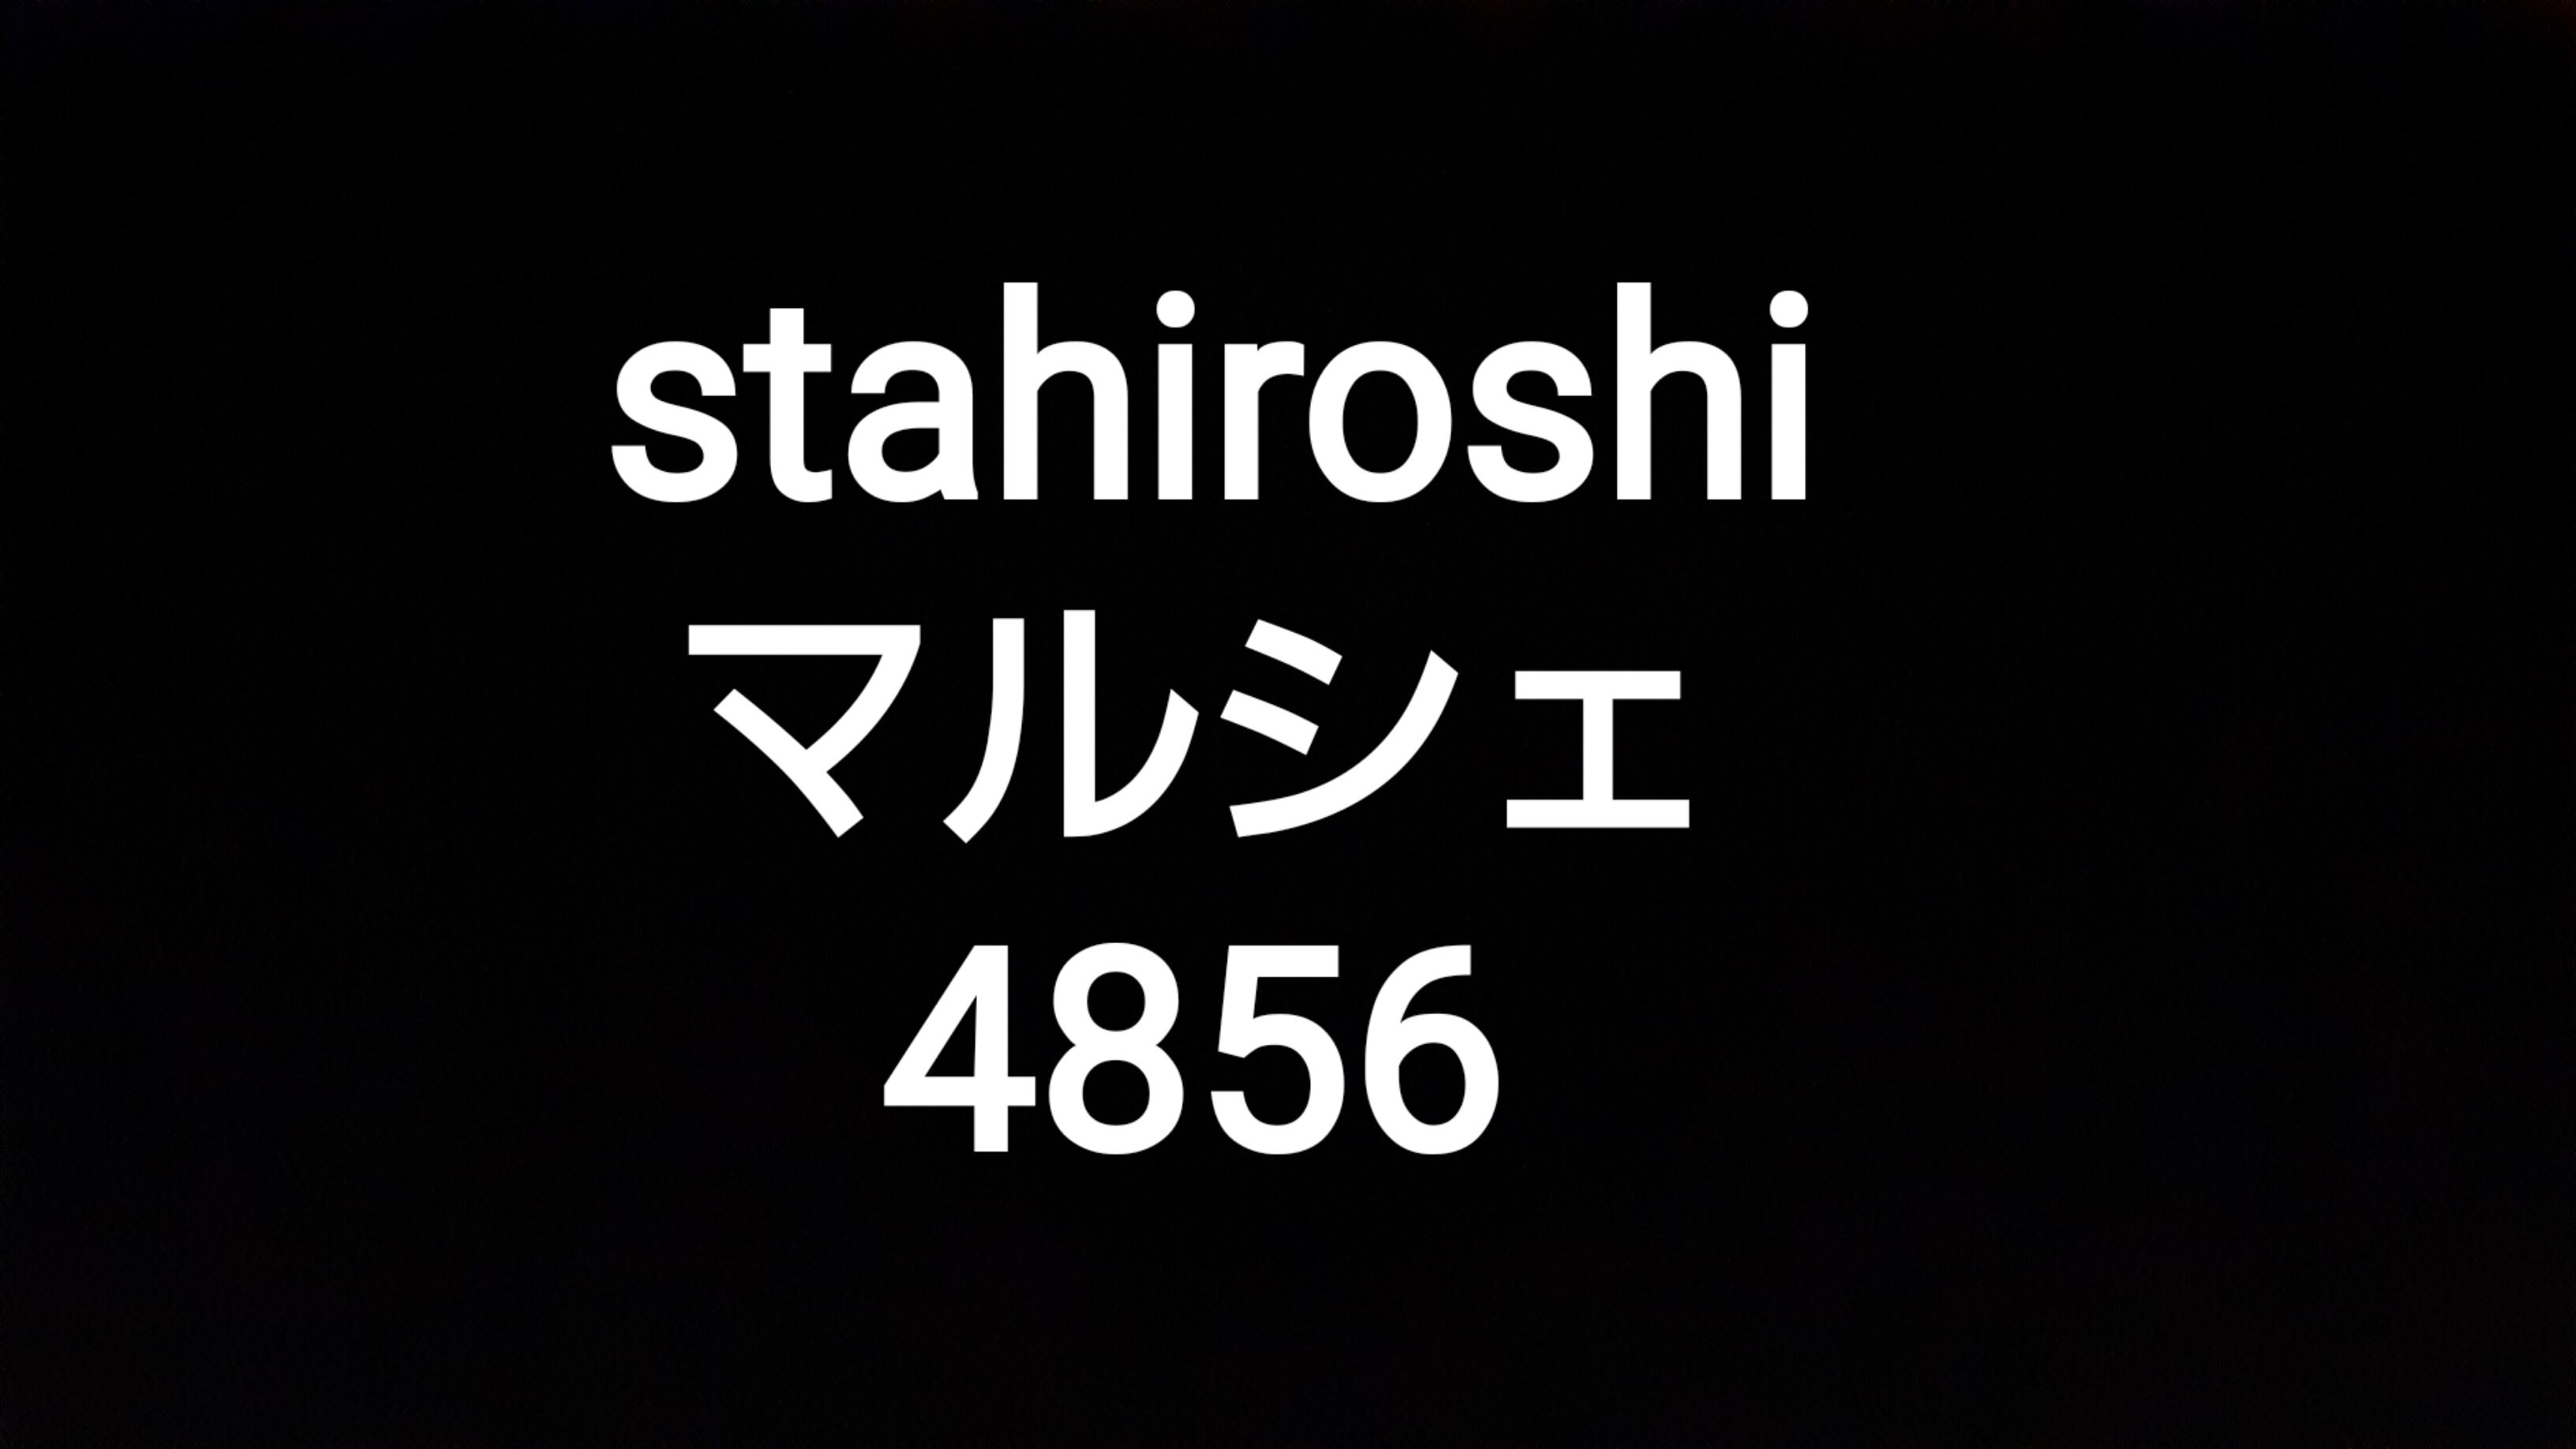 stahiroshiマルシェ4856